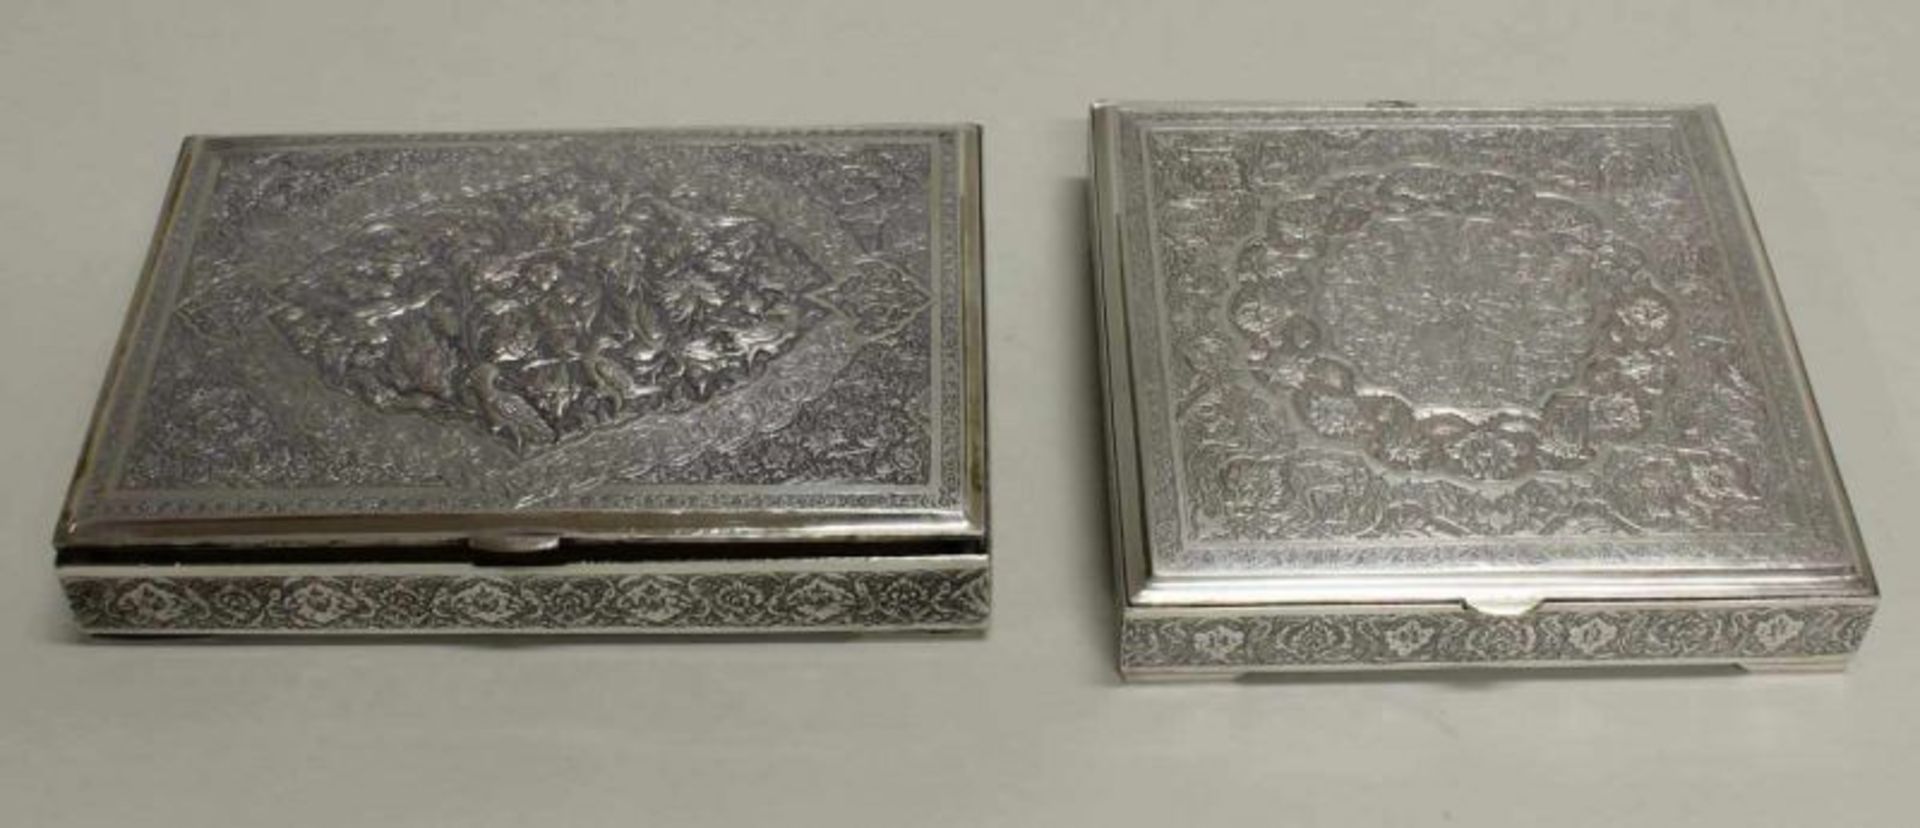 Deckeldose, Silber, wohl Orient, 20. Jh., ornamentales Reliefdekor, 3.5 x 16.5 x 16.5 cm, ca. 585 g;